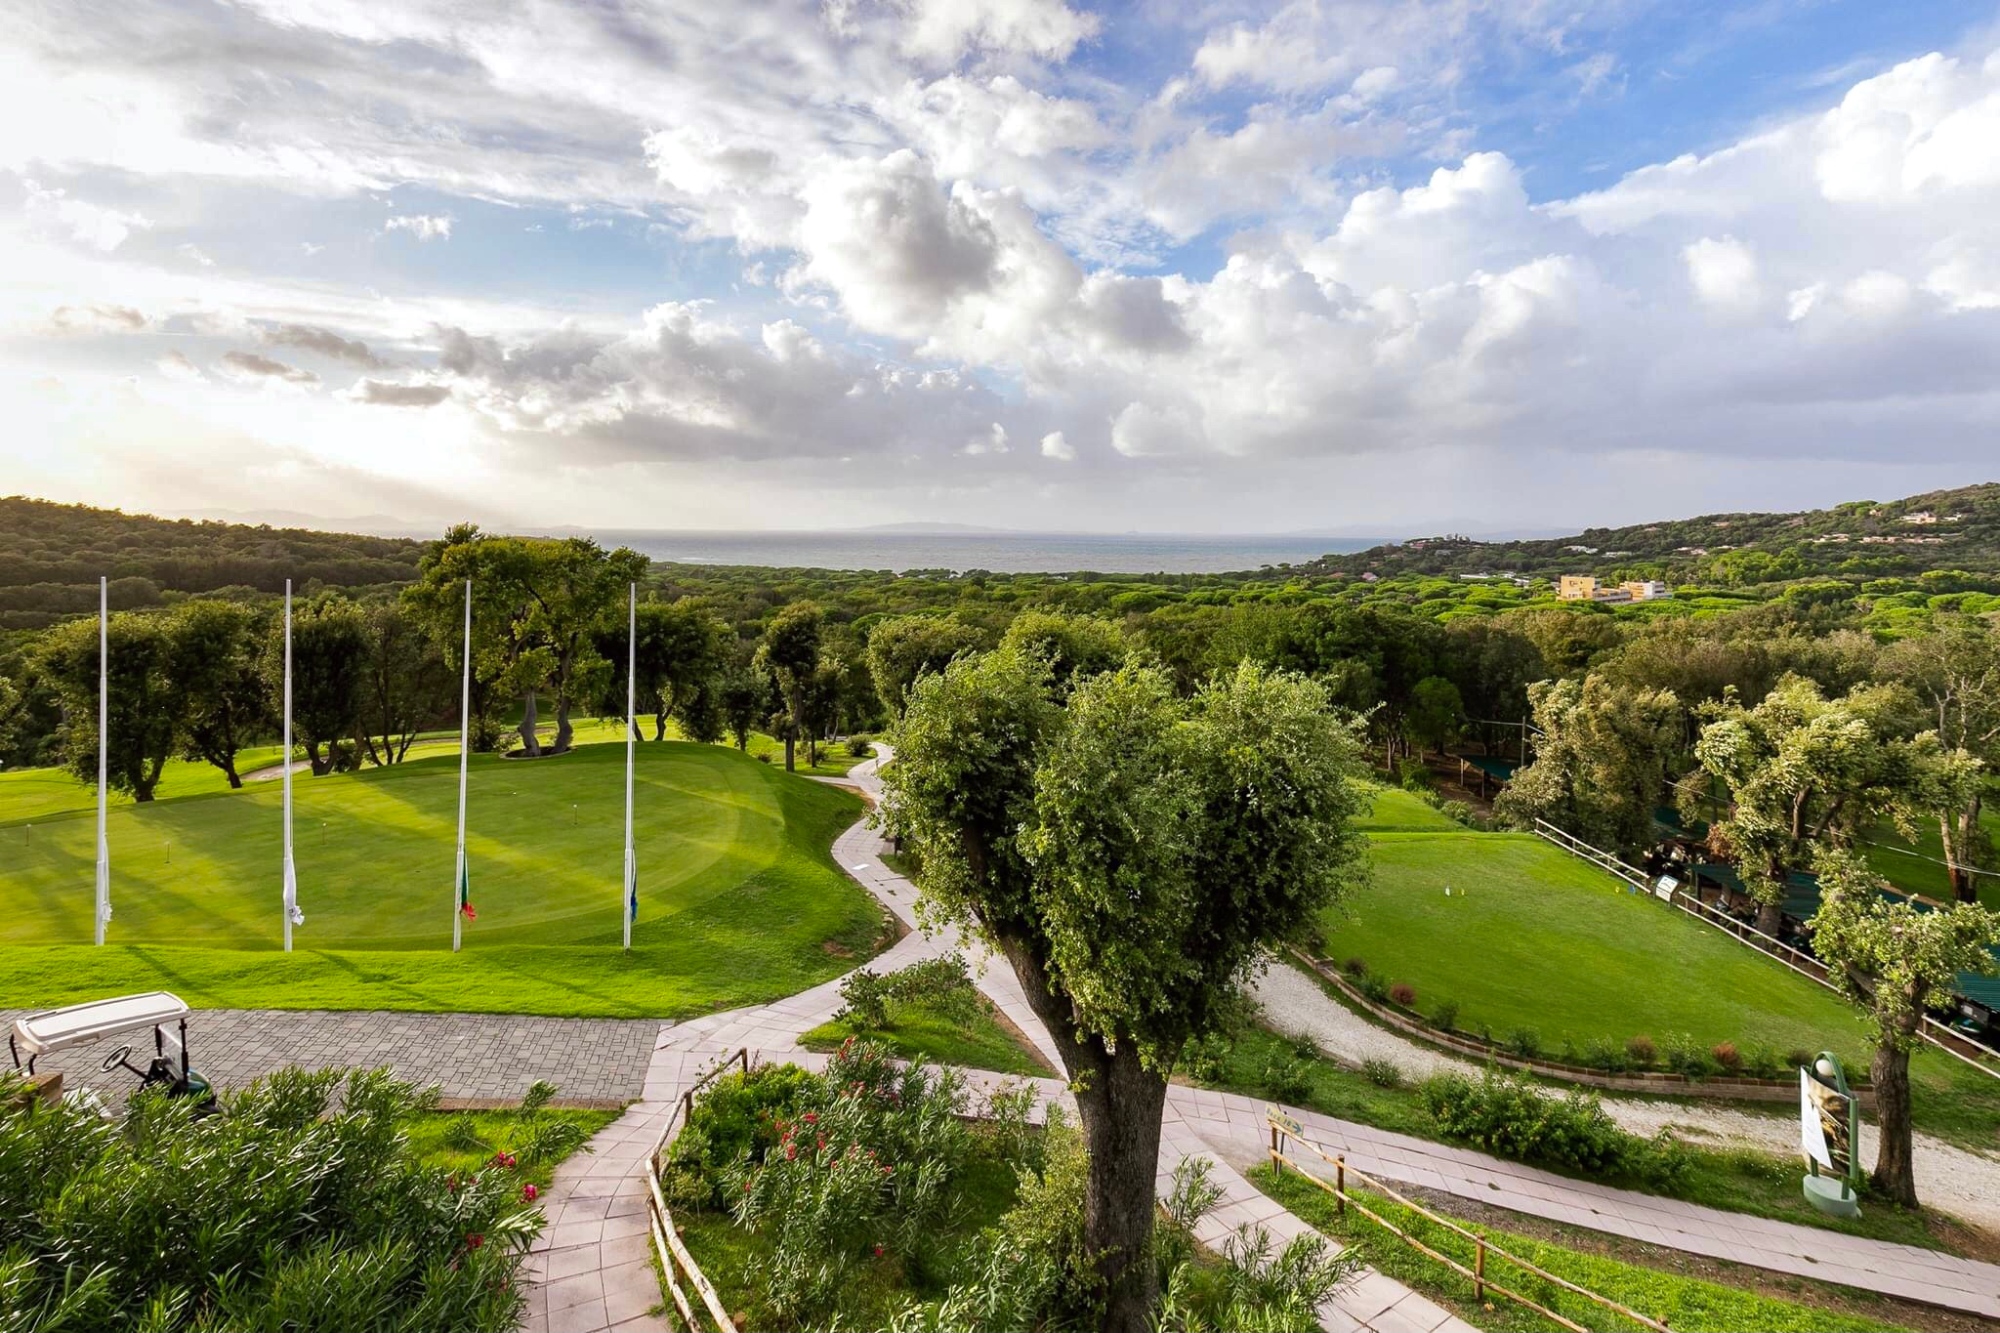 La vista dalla terrazza del Golf Club Punta Ala